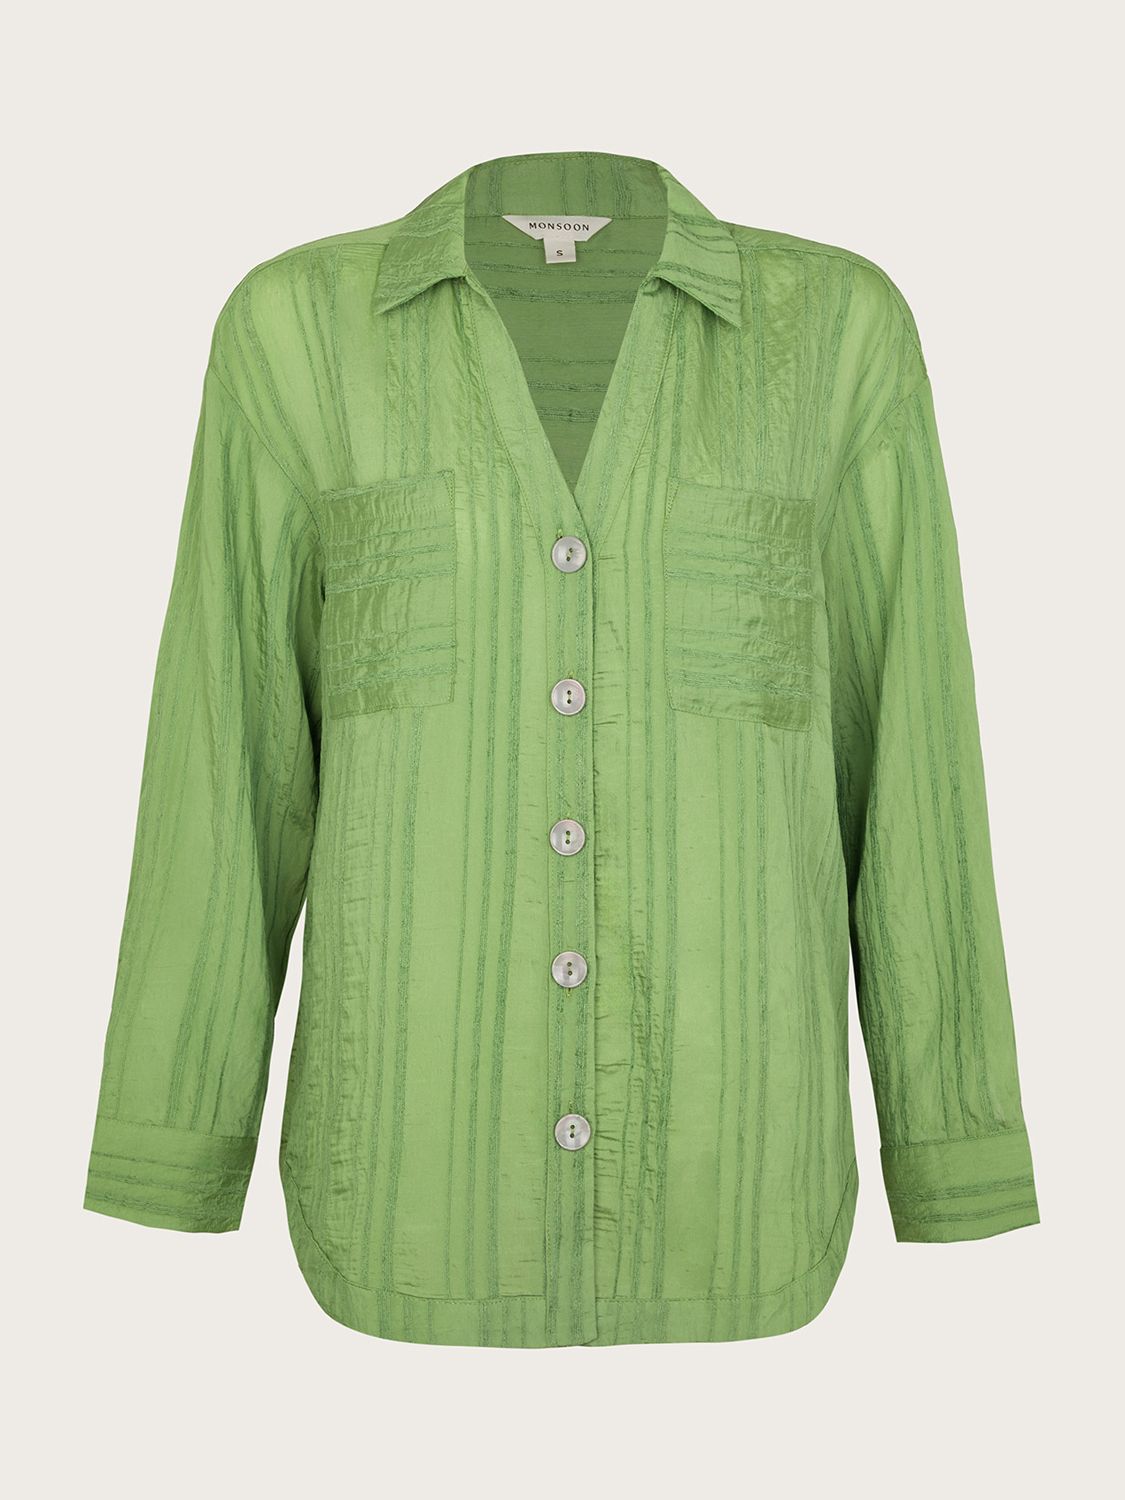 Monsoon Sofia Textured Shirt, Green, S